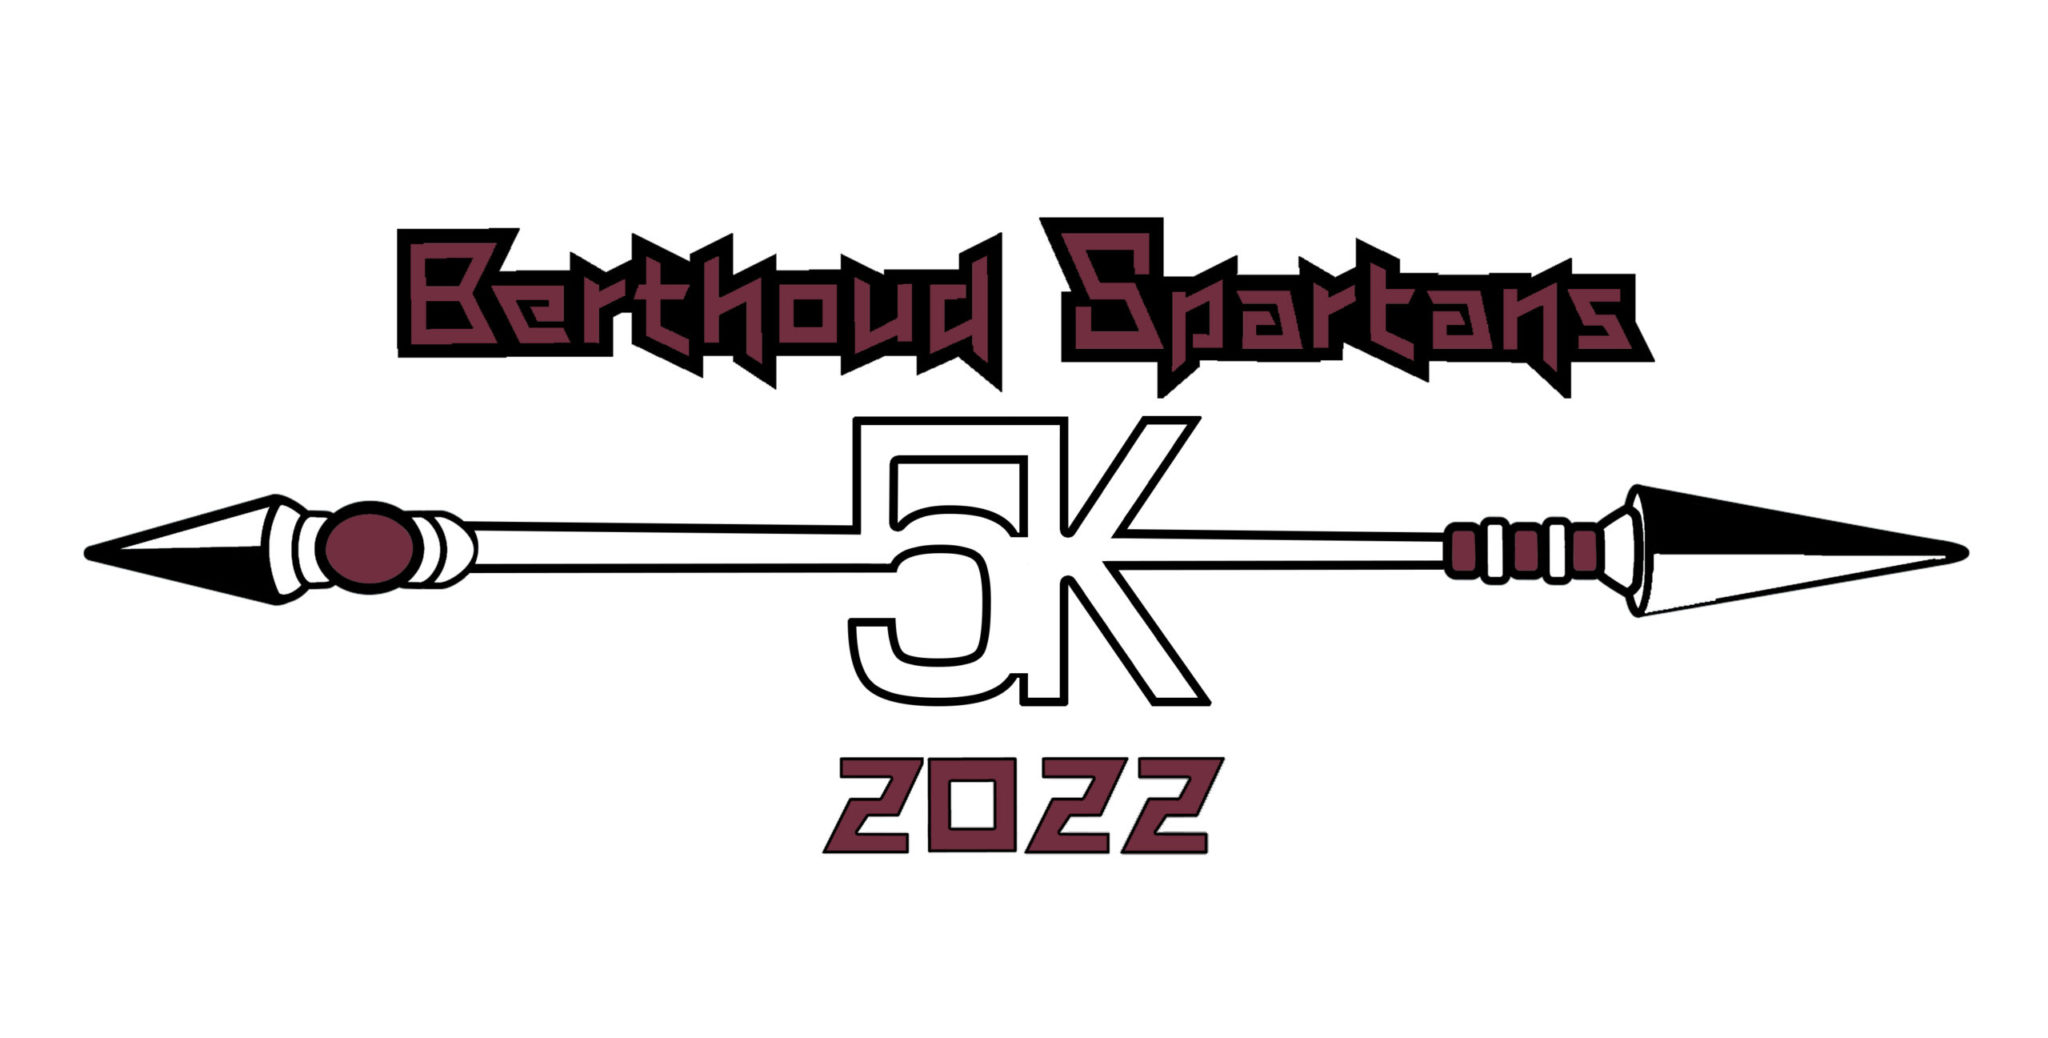 Berthoud Spartans 5K logo on RaceRaves